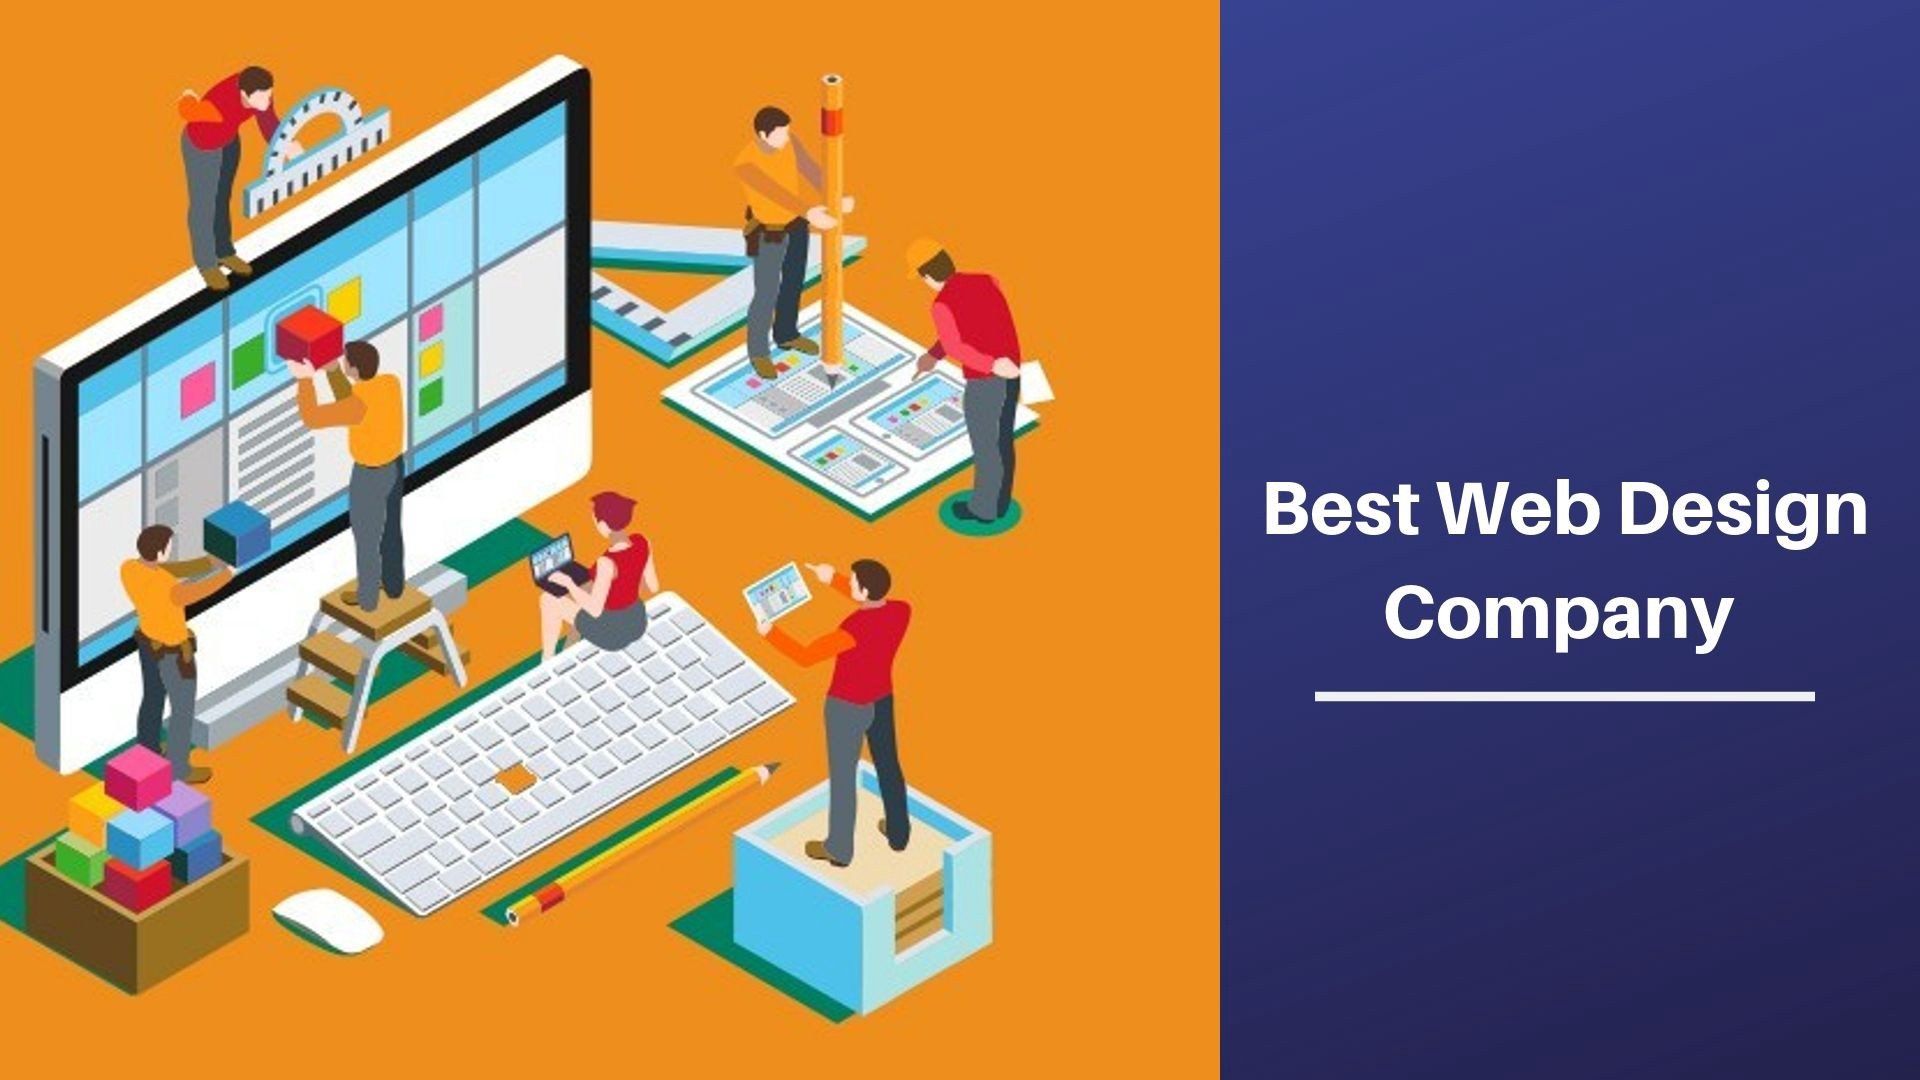 Best-Website-Designing-Company-in-india-saminus-5e62a404